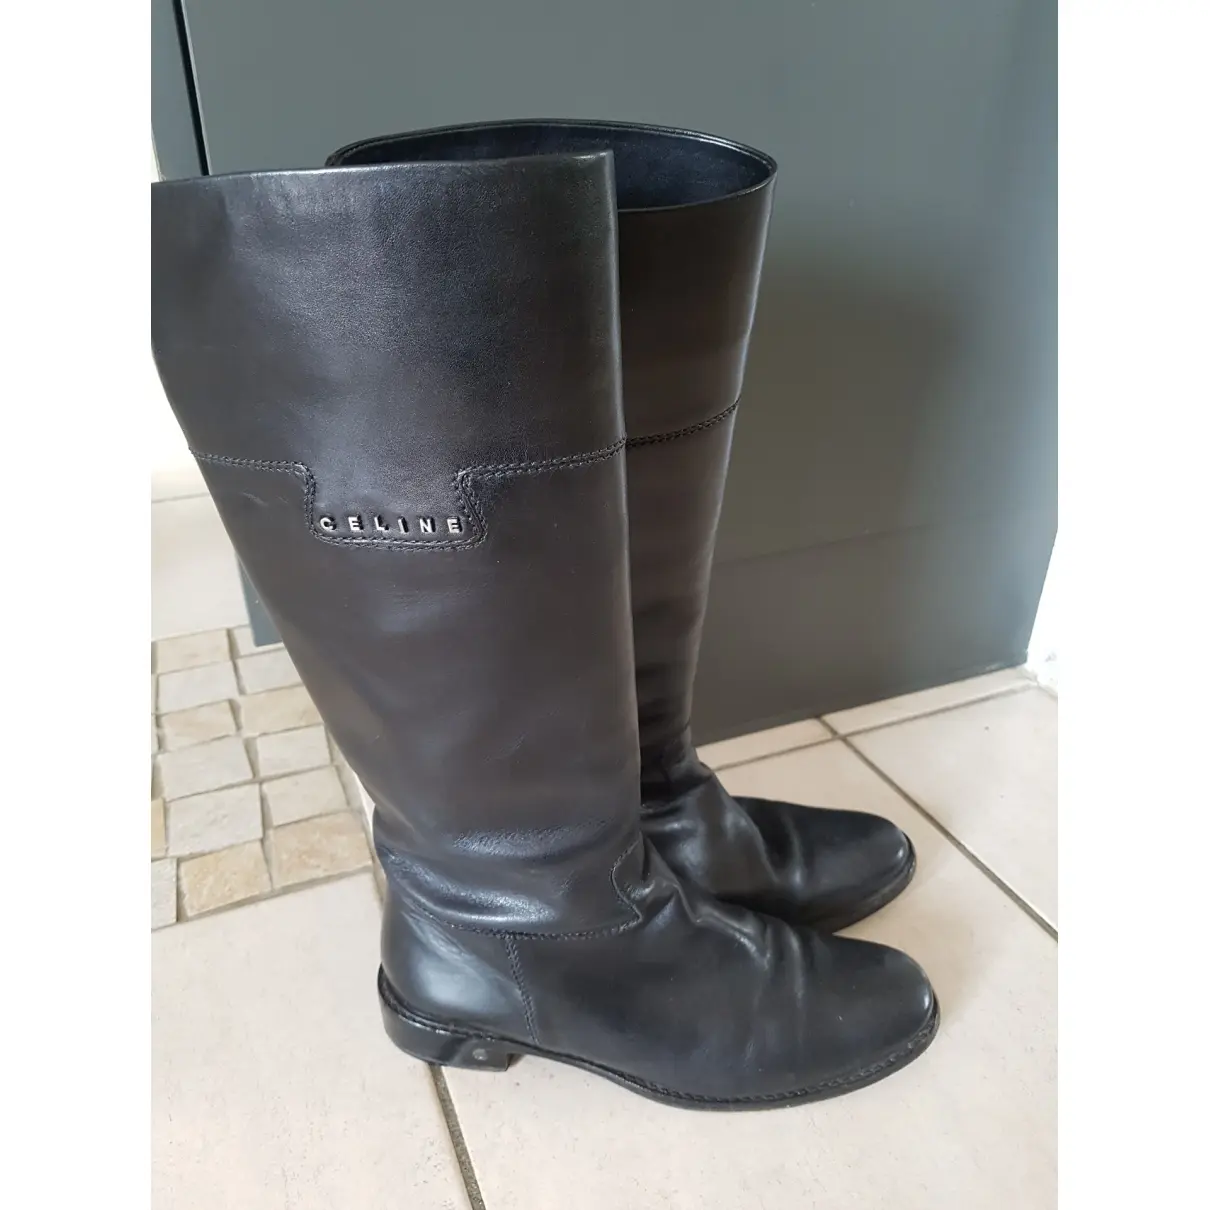 Celine Leather riding boots for sale - Vintage